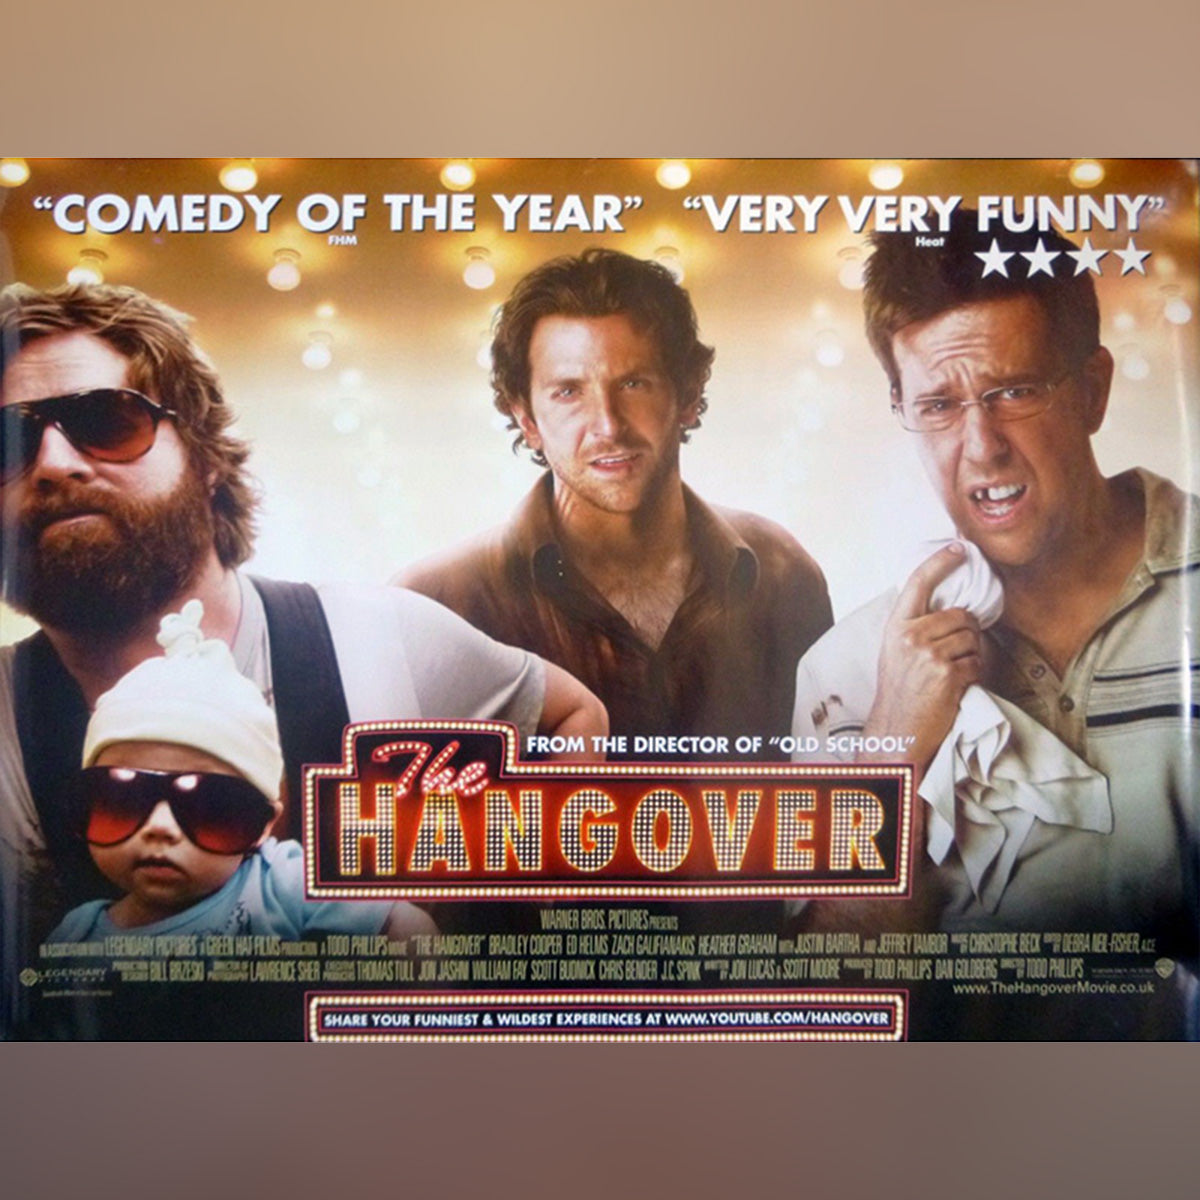 Original Movie Poster of Hangover, The (2009)